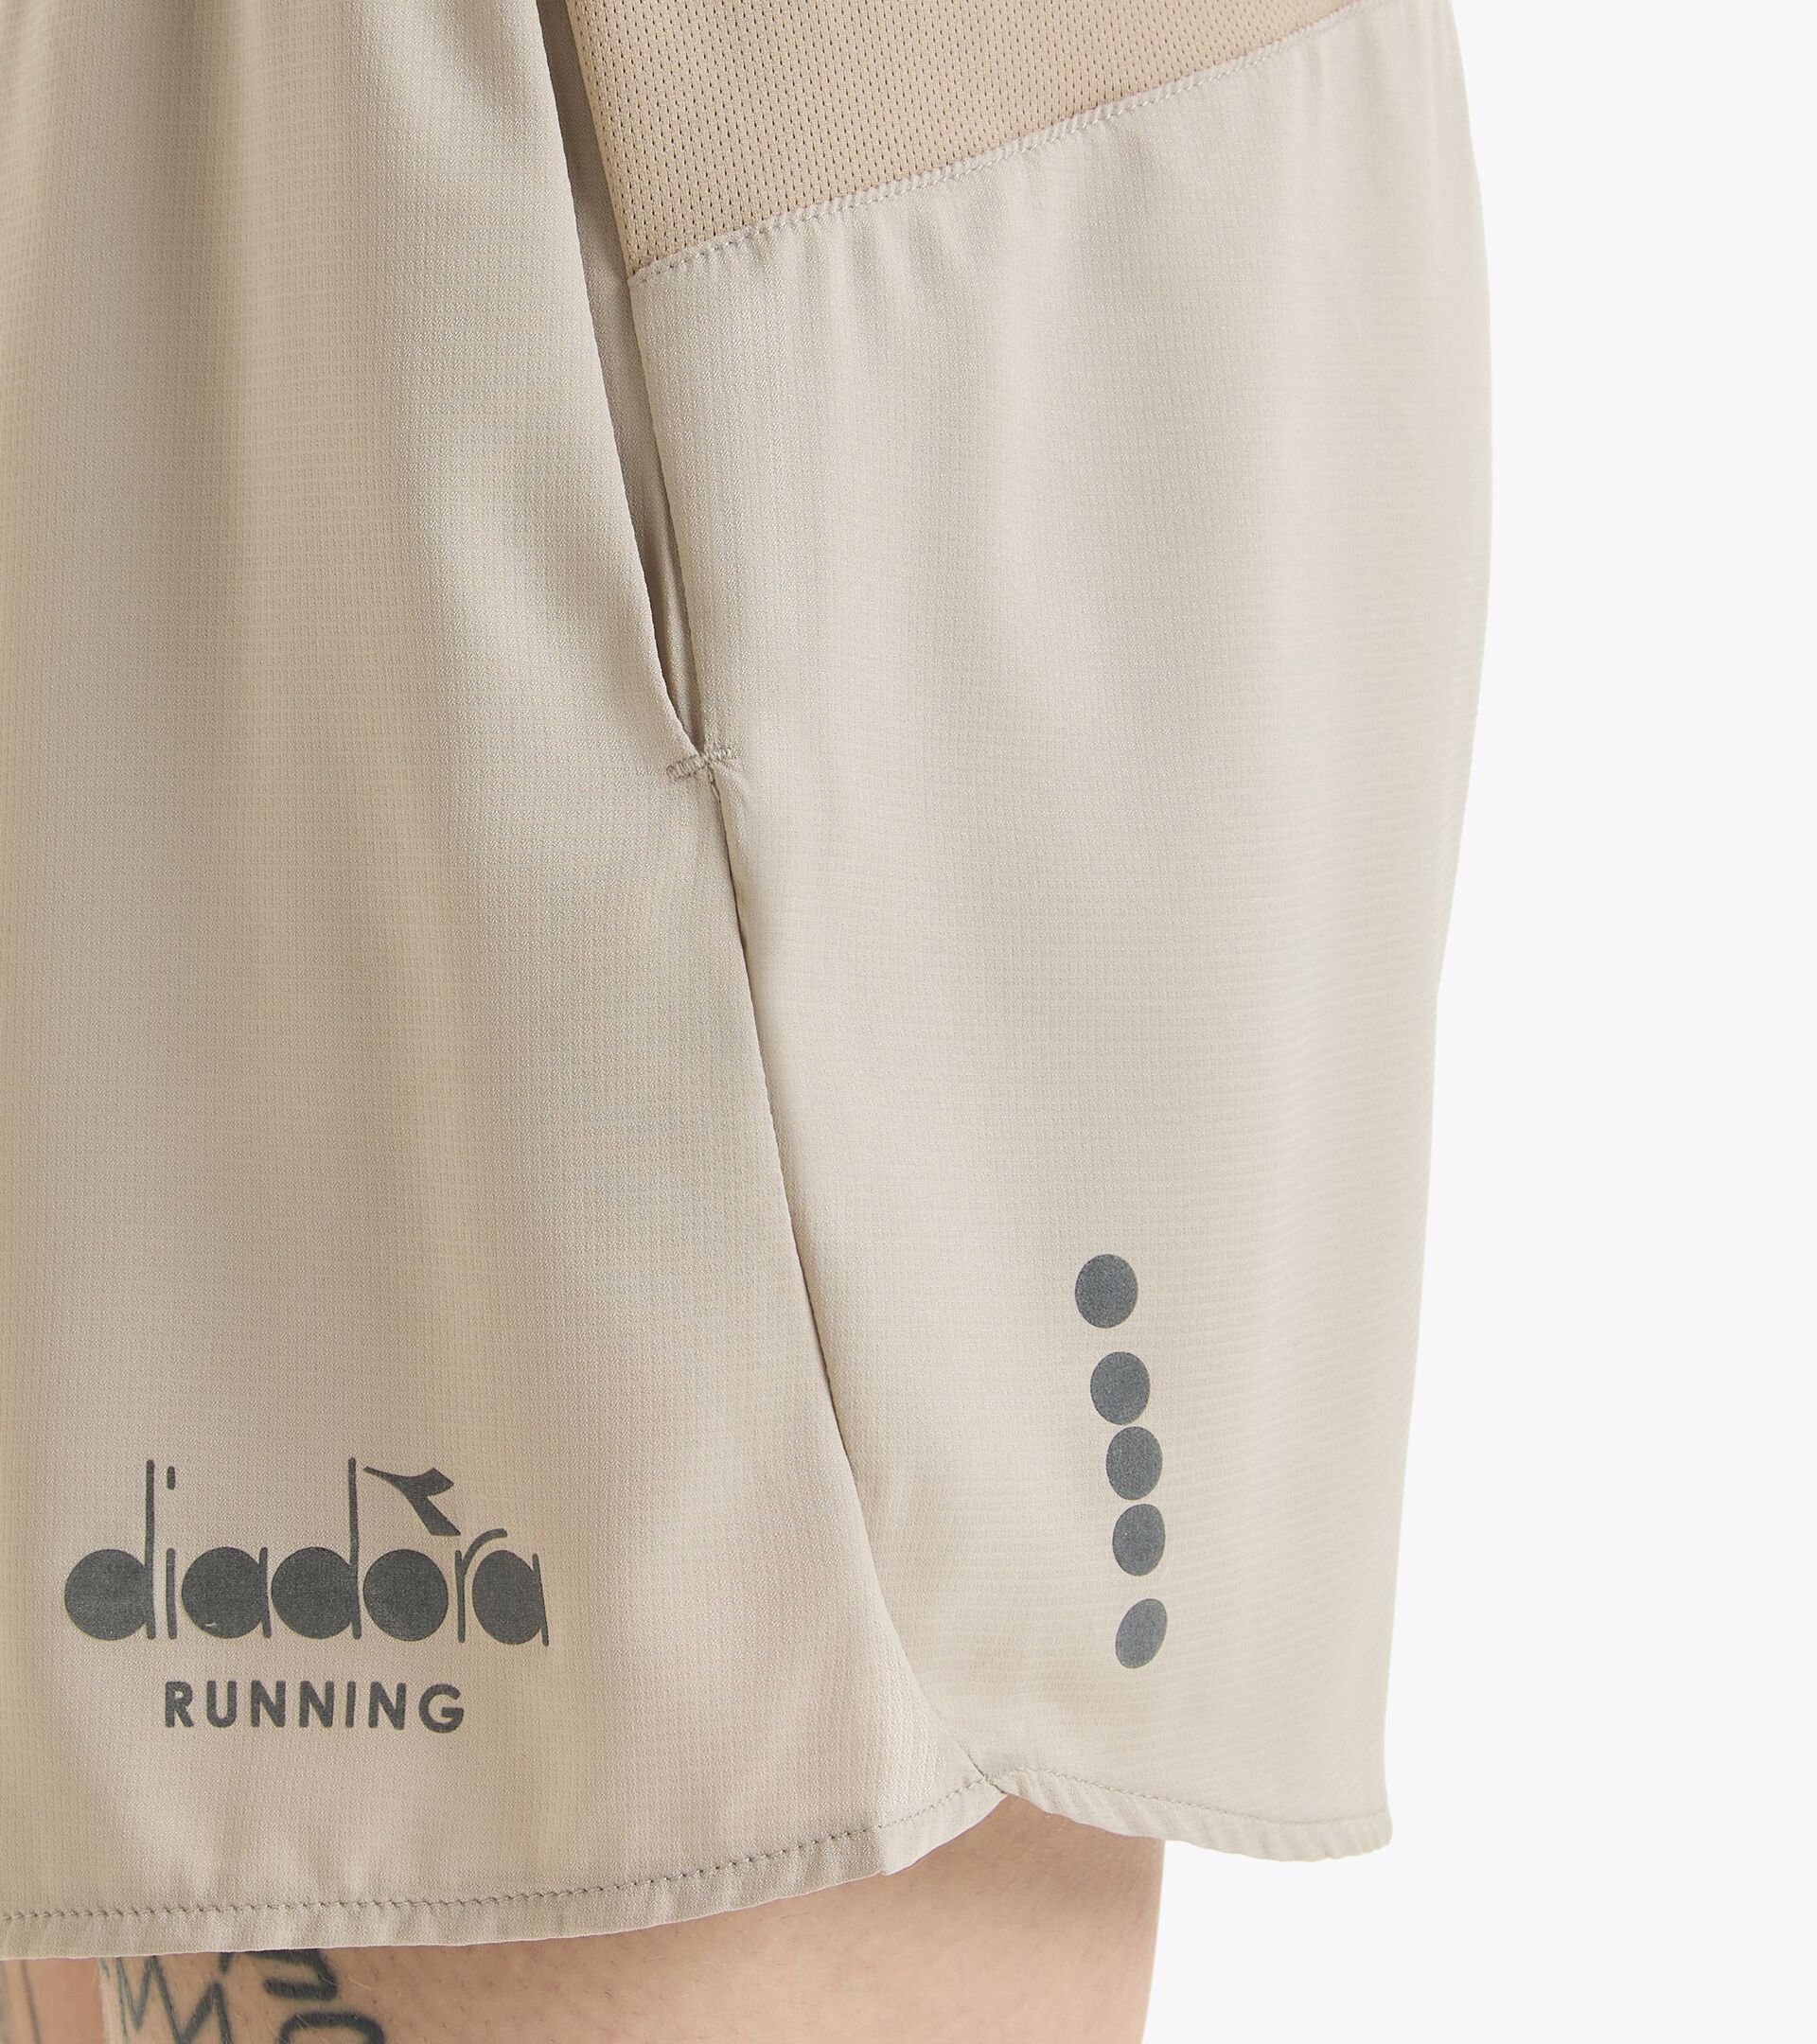 5’’ running shorts - Light fabric - Men’s SHORTS 5'' MILL CITY HUMUS - Diadora